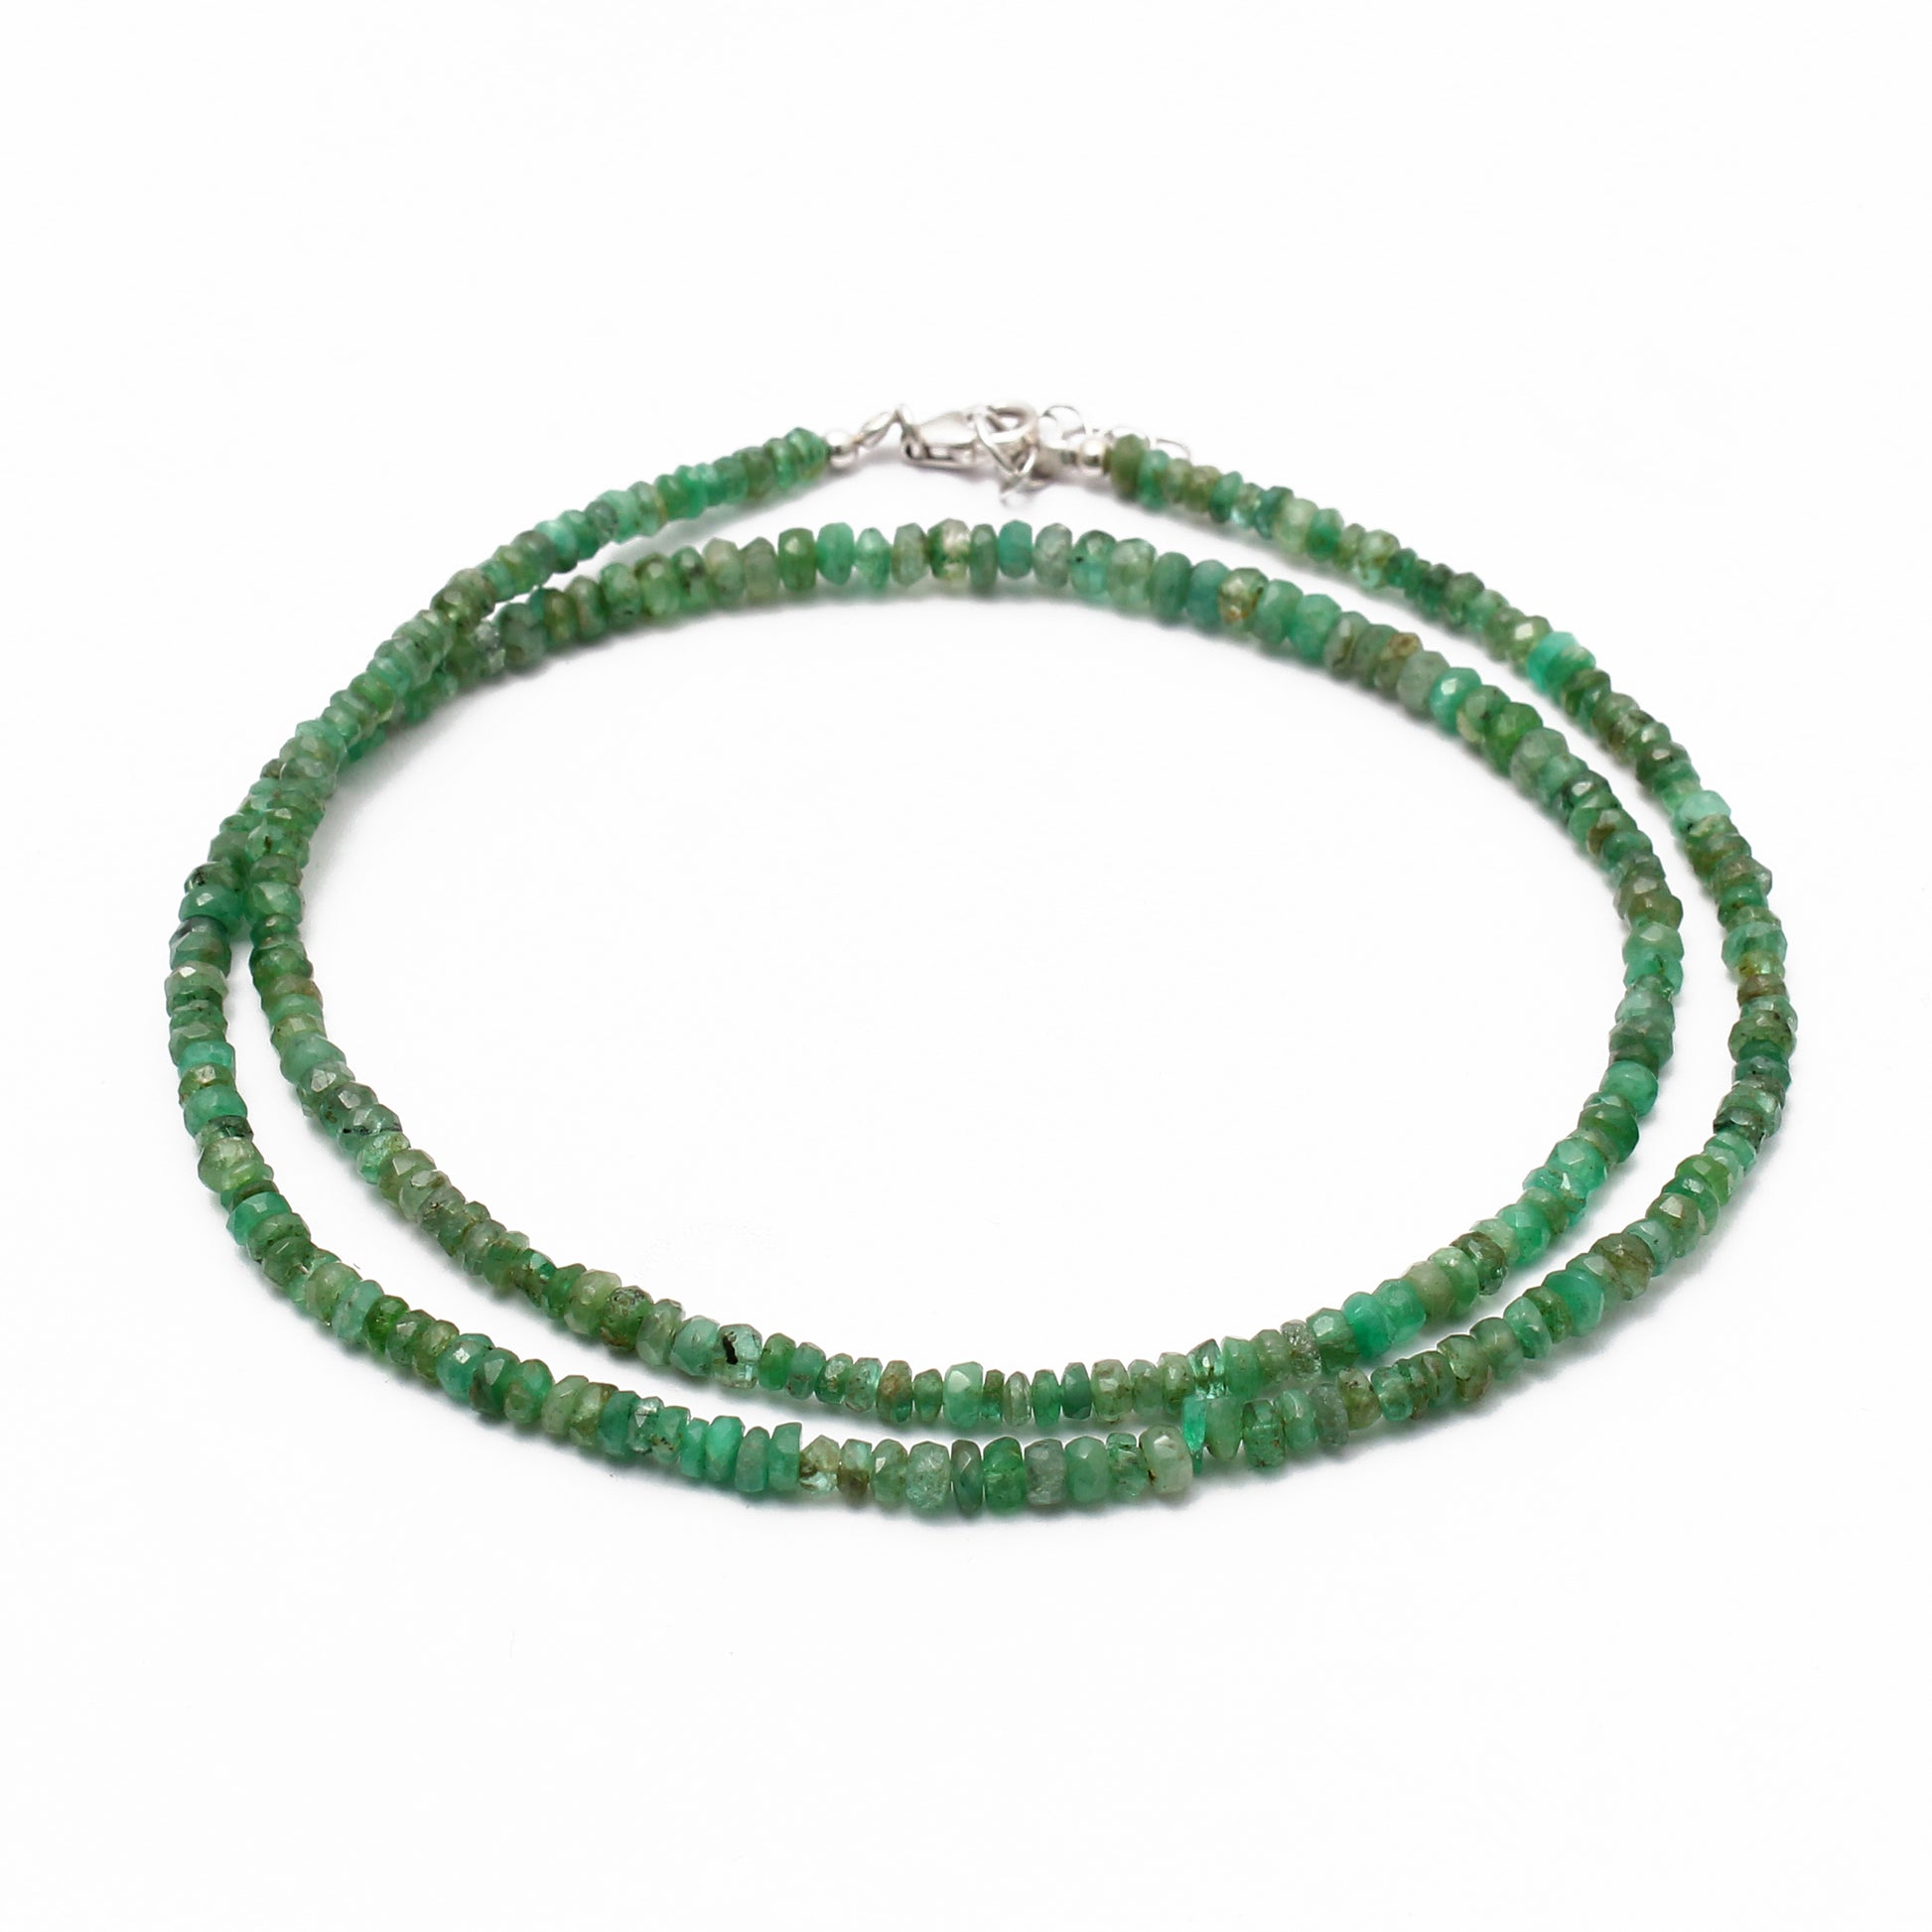  Birthstone Emerald Beaded Necklace